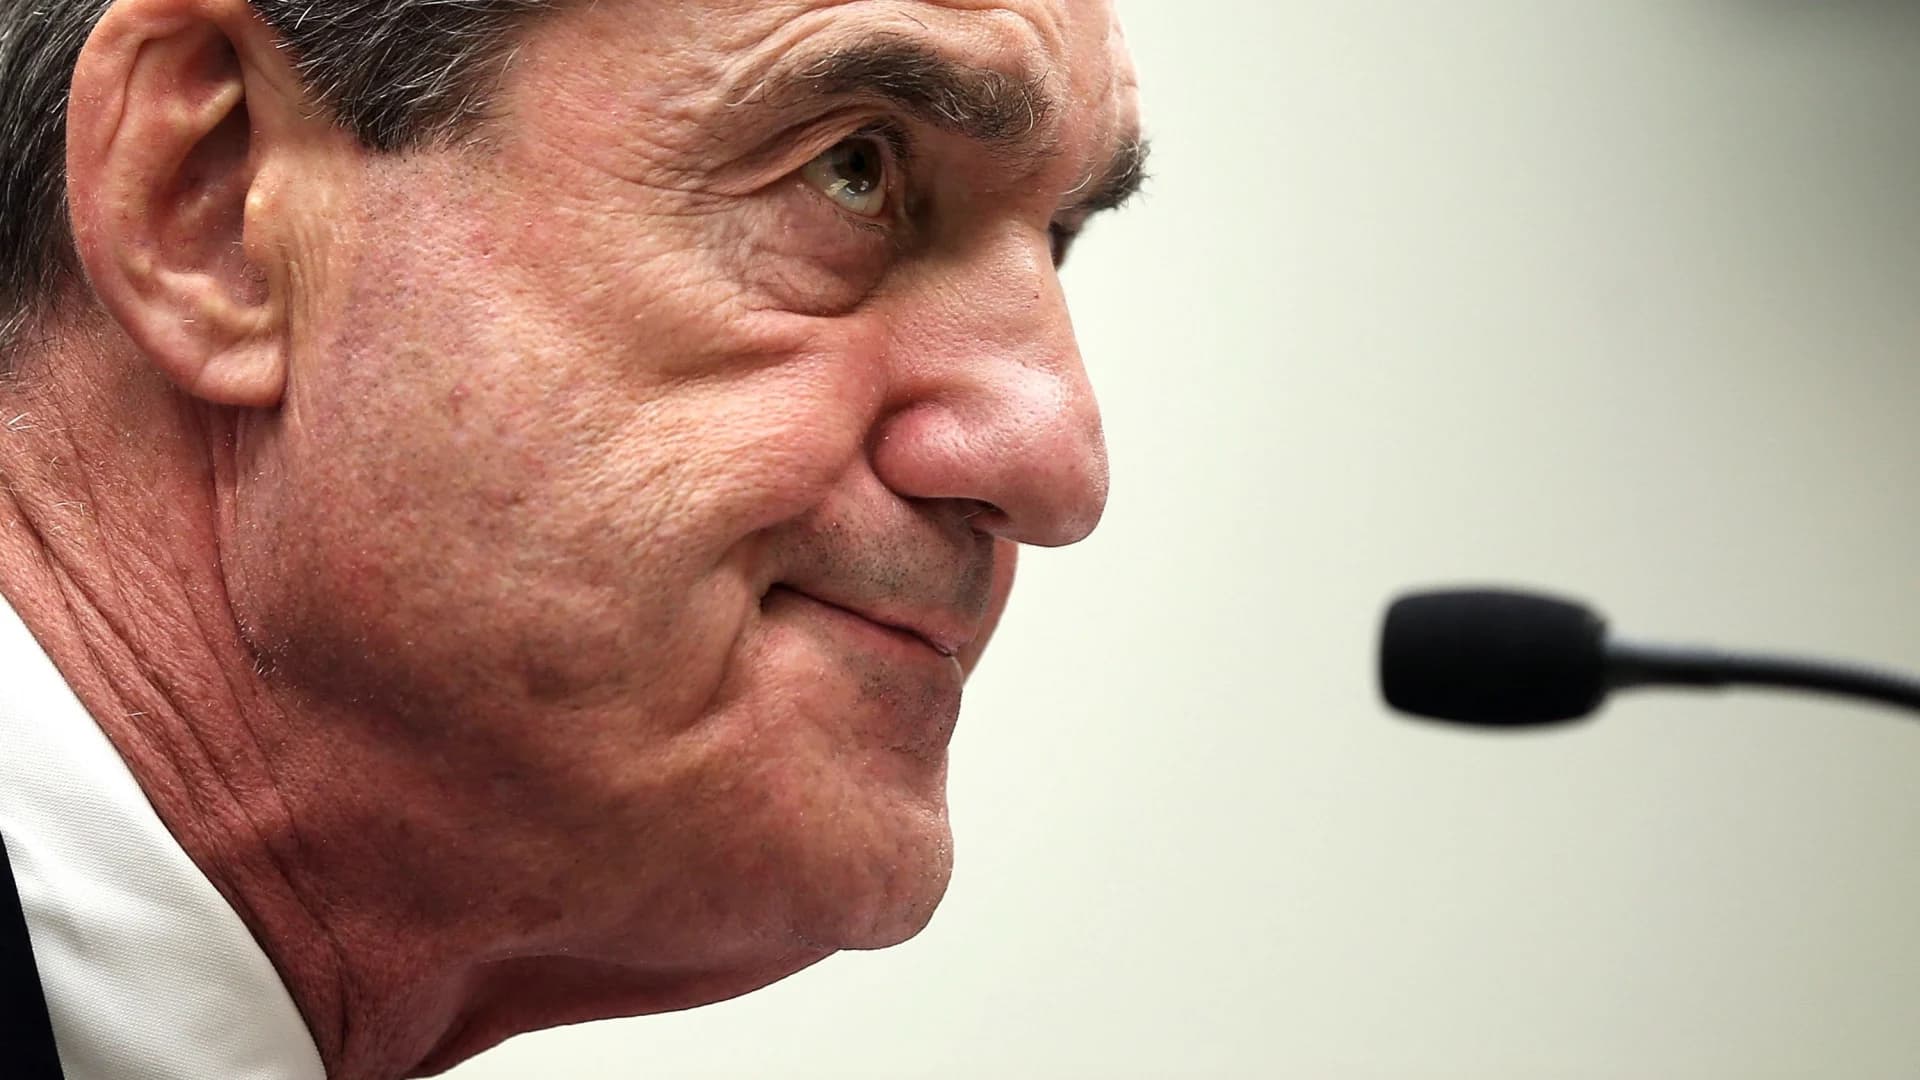 Washington awaits results as Mueller wraps Russia probe